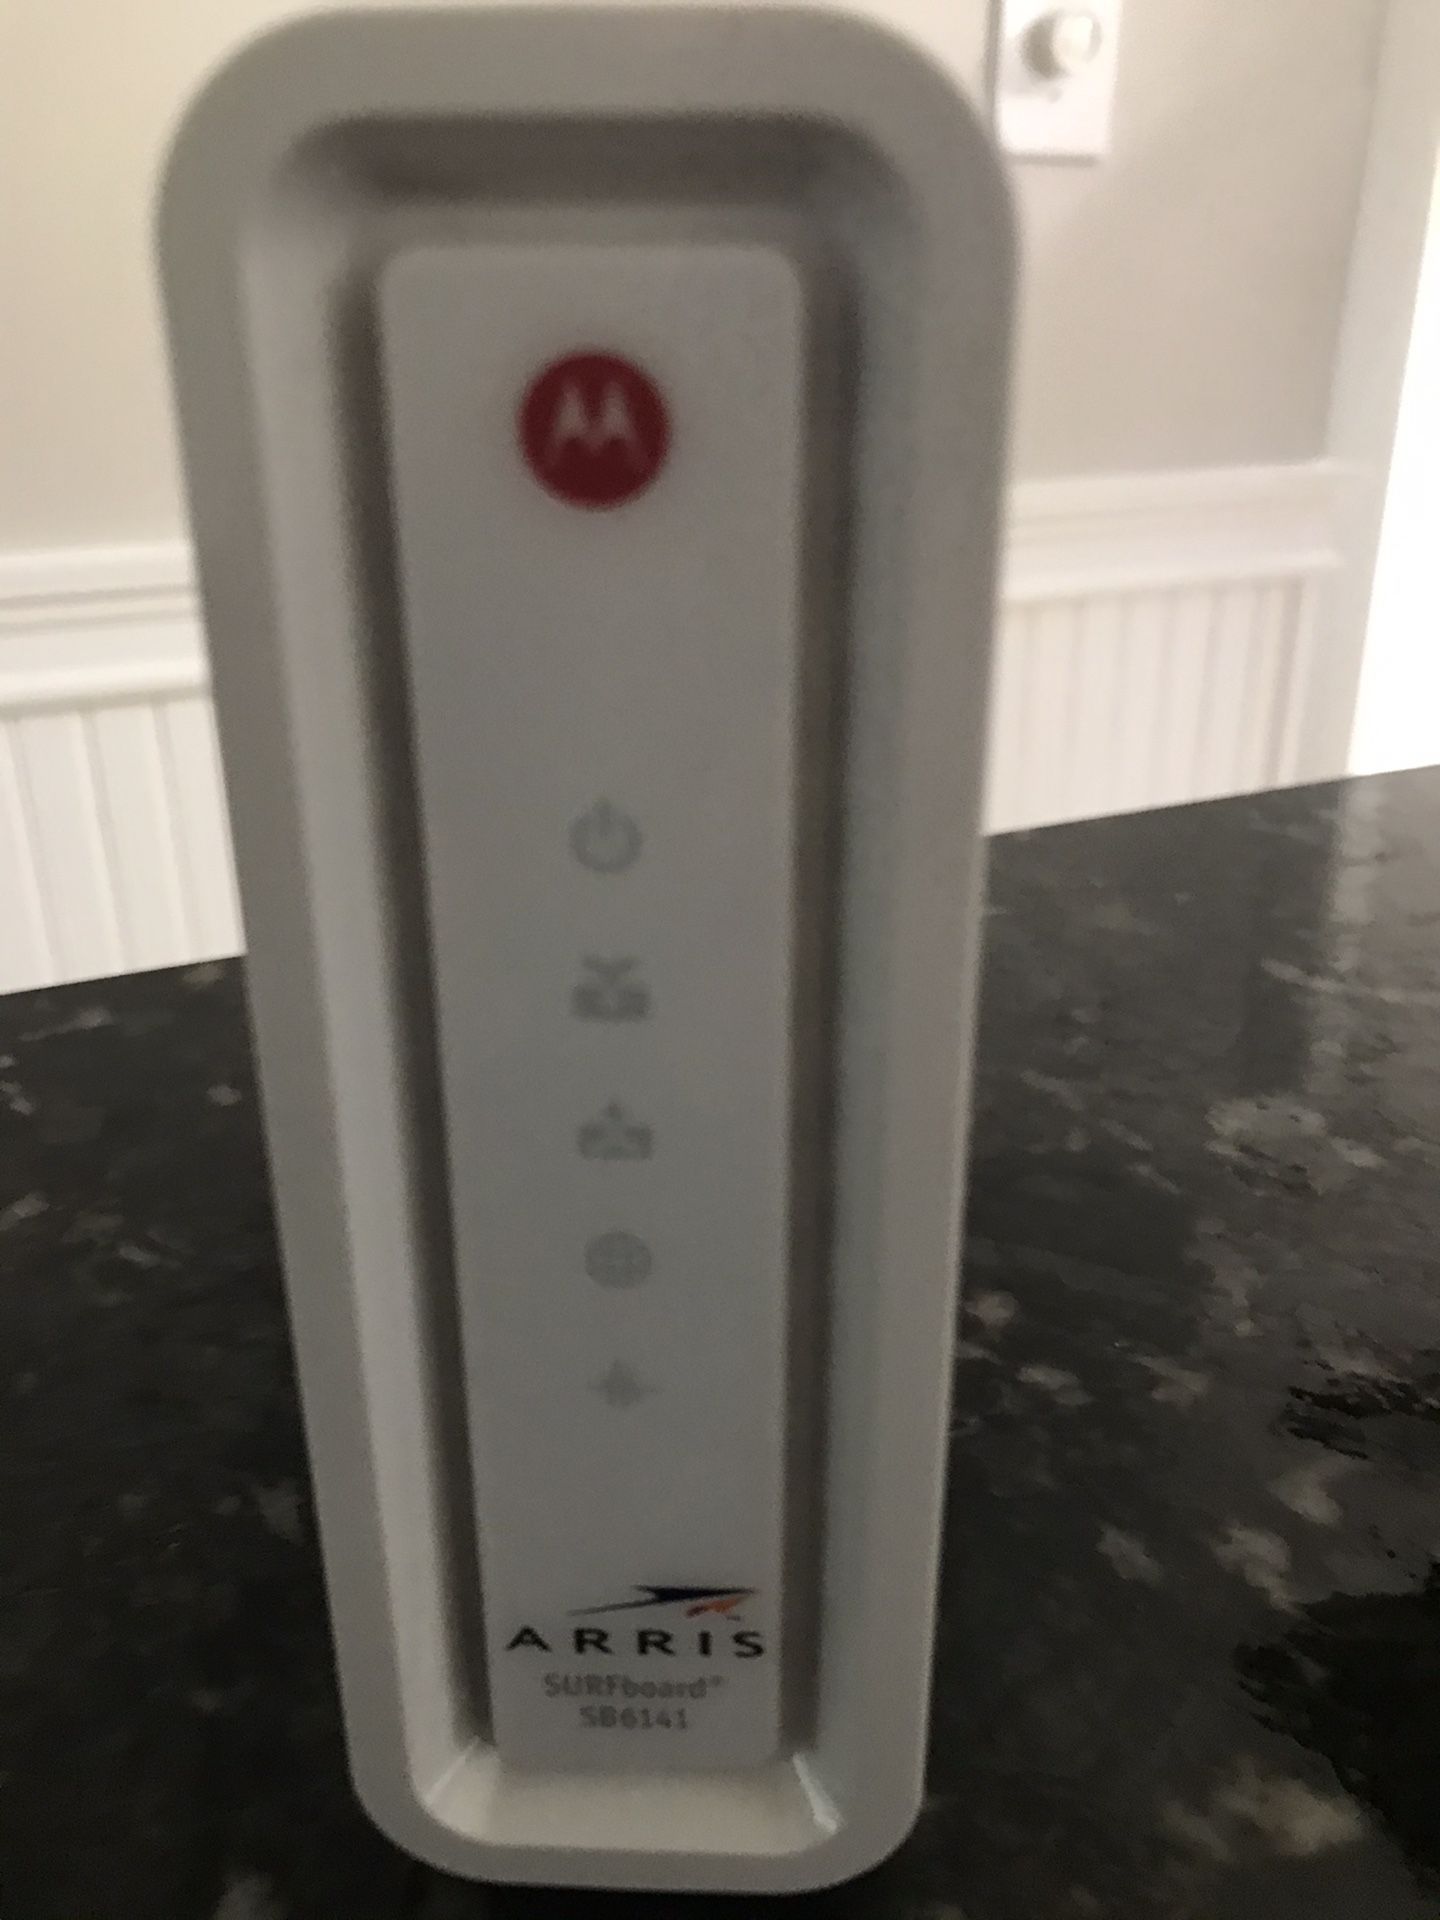 ARRIS Internet modem